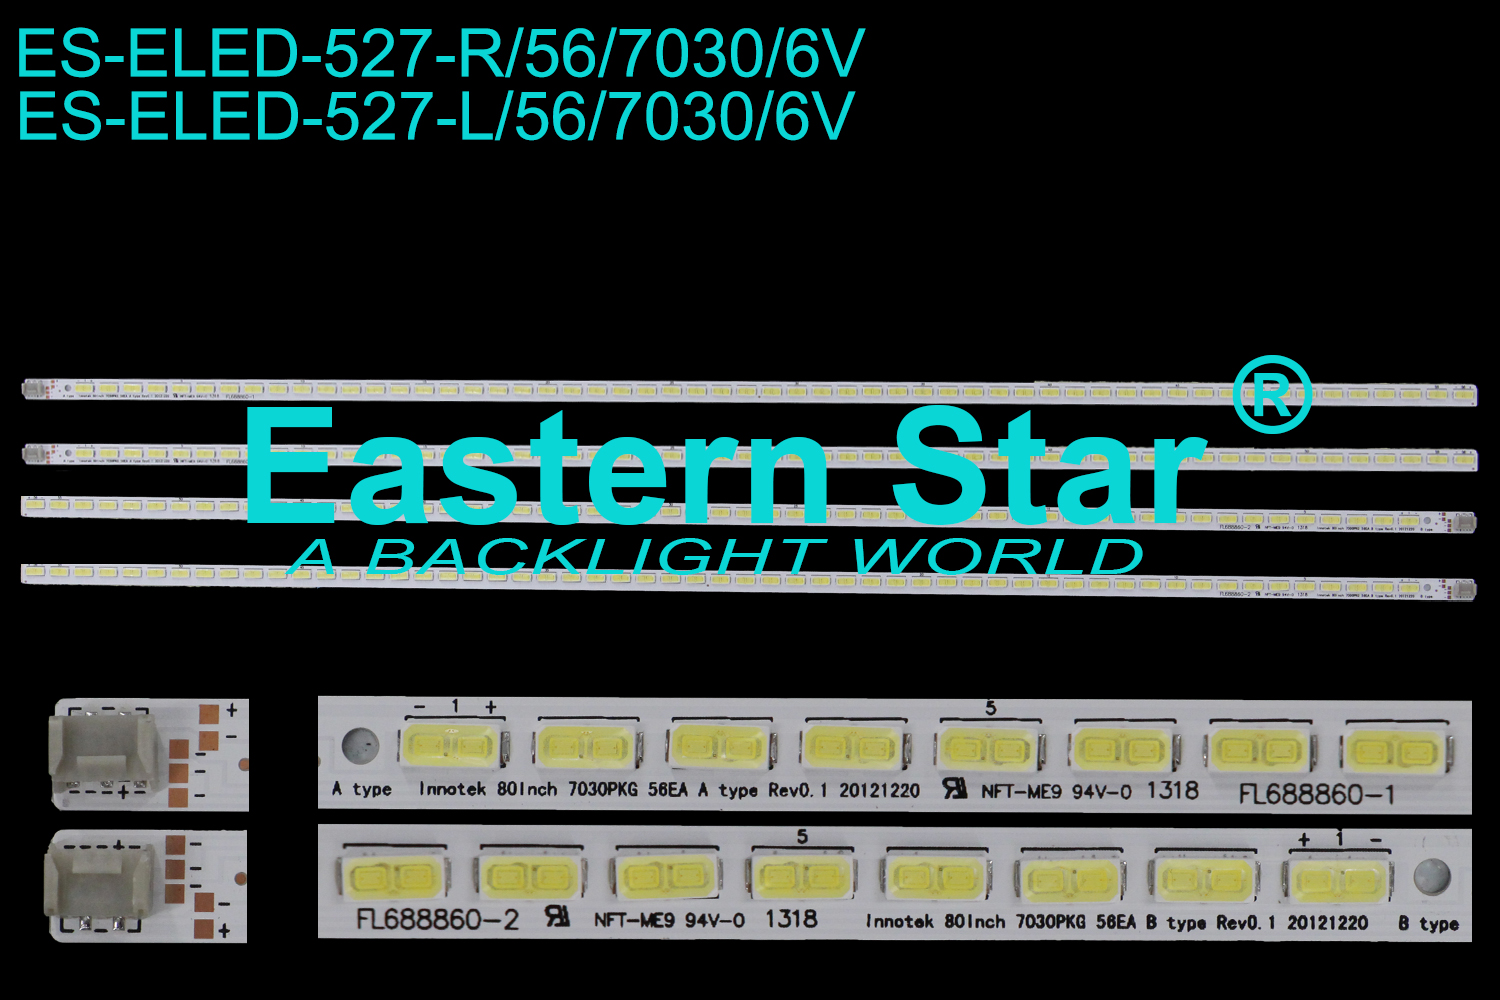 ES-ELED-527 ELED/EDGE TV backlight use for 80'' SHARP/VIZIO LC-80C6500U,LC-80LE650U, LG INNOTEK 80INCH 7030PKG 56EA A TYPE REV0.1 20121220, LG INNOTEK 80INCH 7030PKG 56EA B TYPE REV0.1 20121220 LED STRIPS(4)